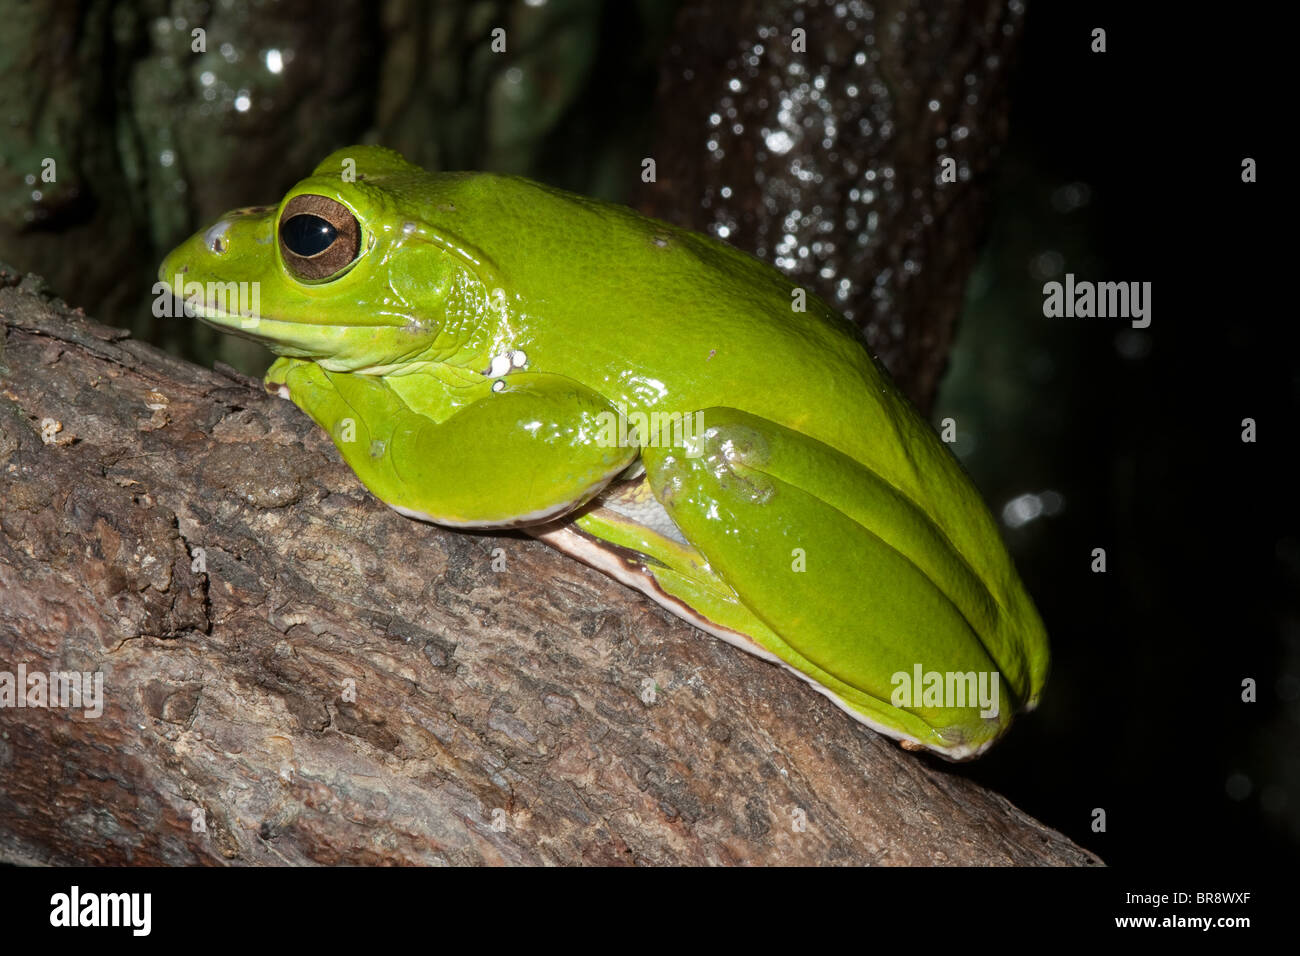 Chinese Gliding Frog (Polypedates dennysi) Stock Photo